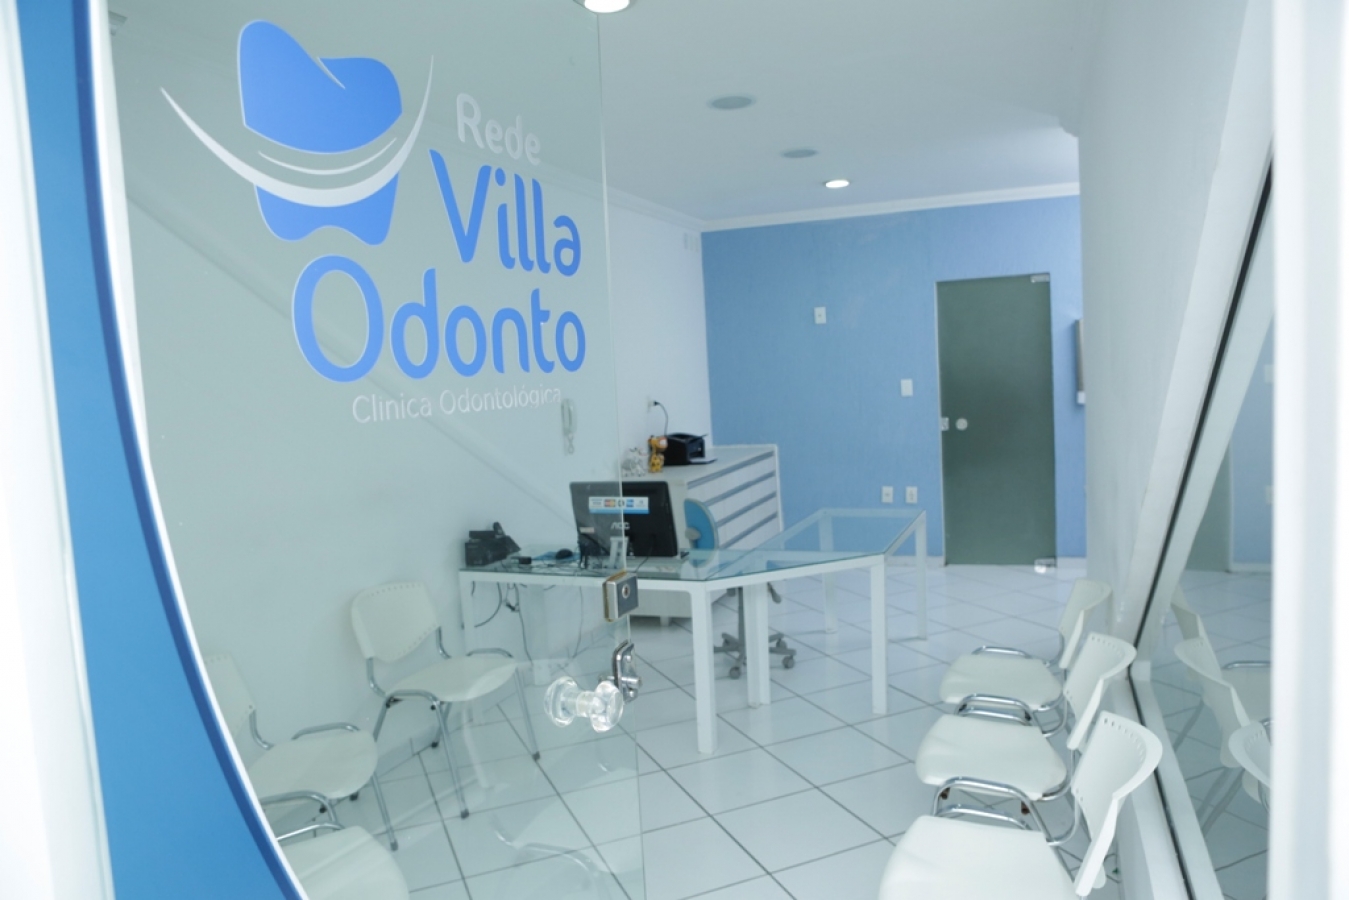 Odontto Vila da Serra – Clínica odontológica localizada no bairro